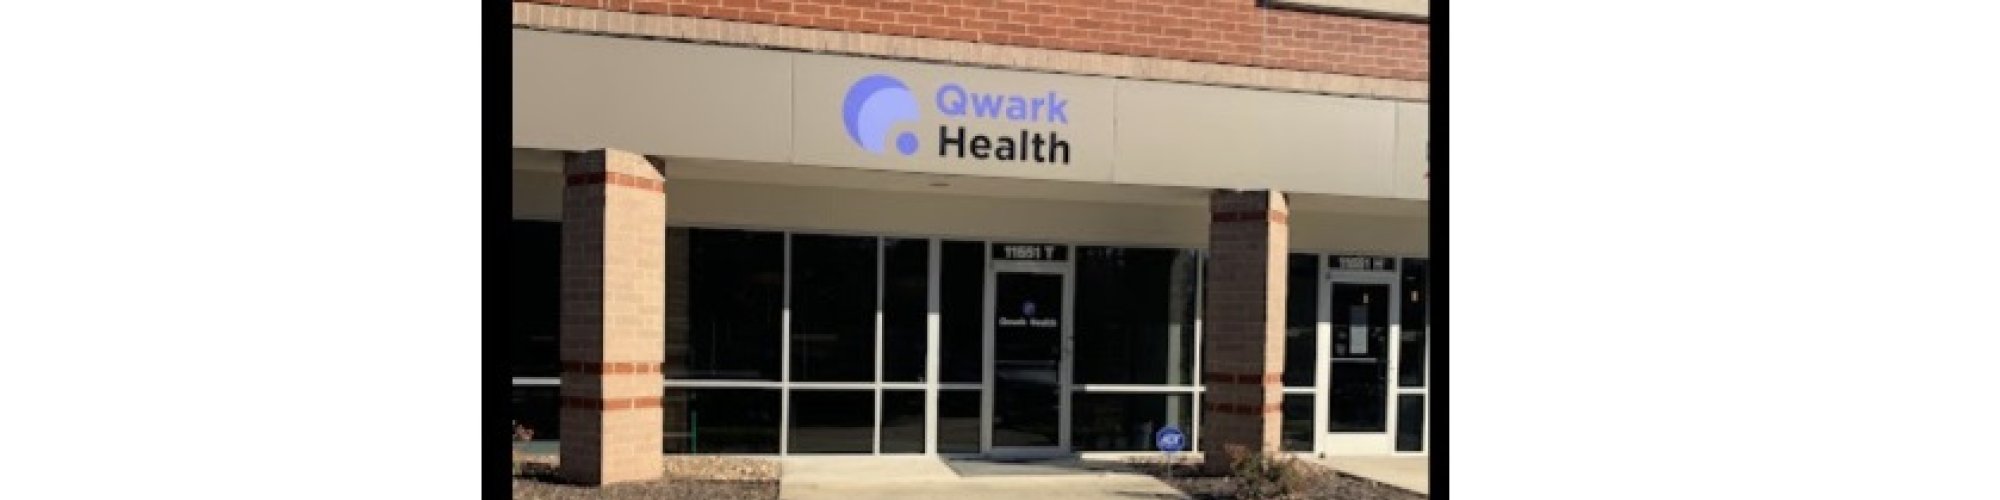 Qwark Pharmacy